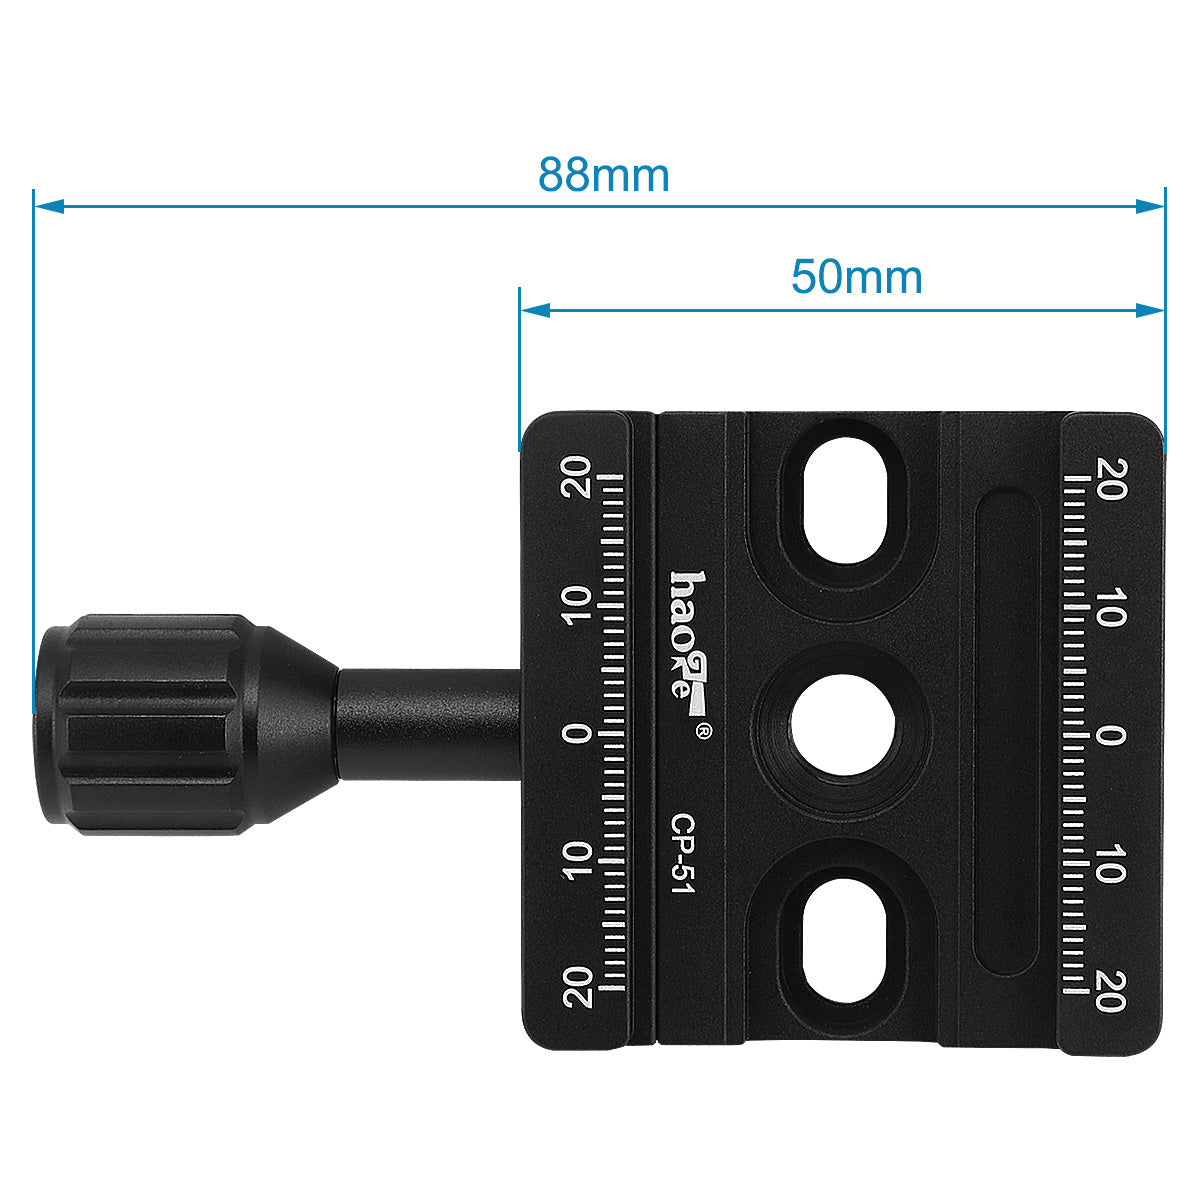 Haoge CP-51 50mm Screw Knob Clamp Adapter Mount for Quick Release QR Plate Camera Tripod Ballhead Monopod Ball Head Fit Arca Swiss